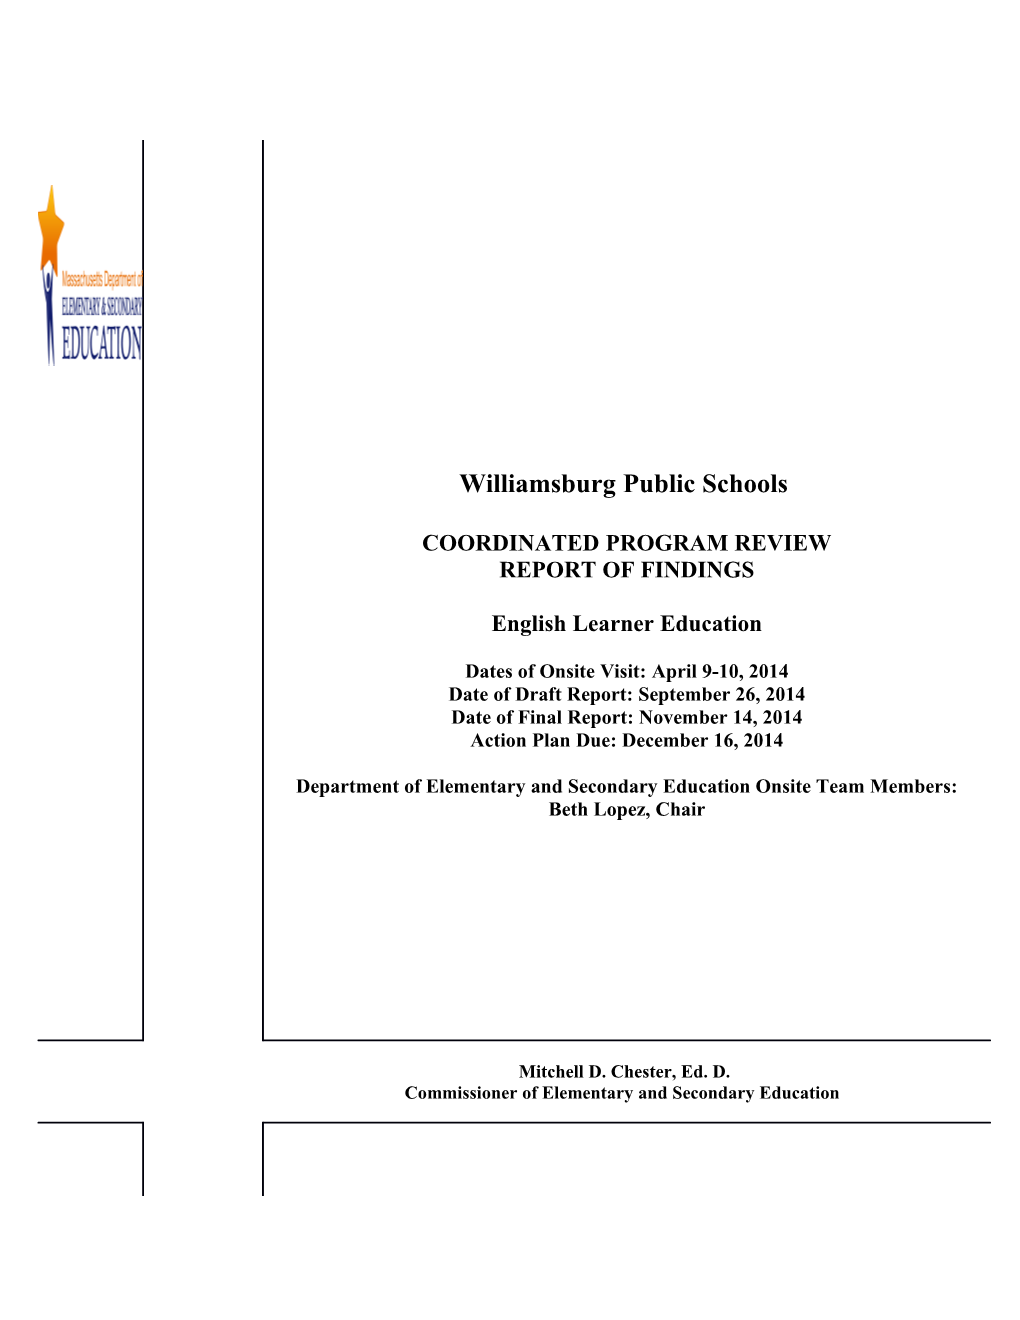 Williamsburg Public Schools CPR Final Report 2013-14